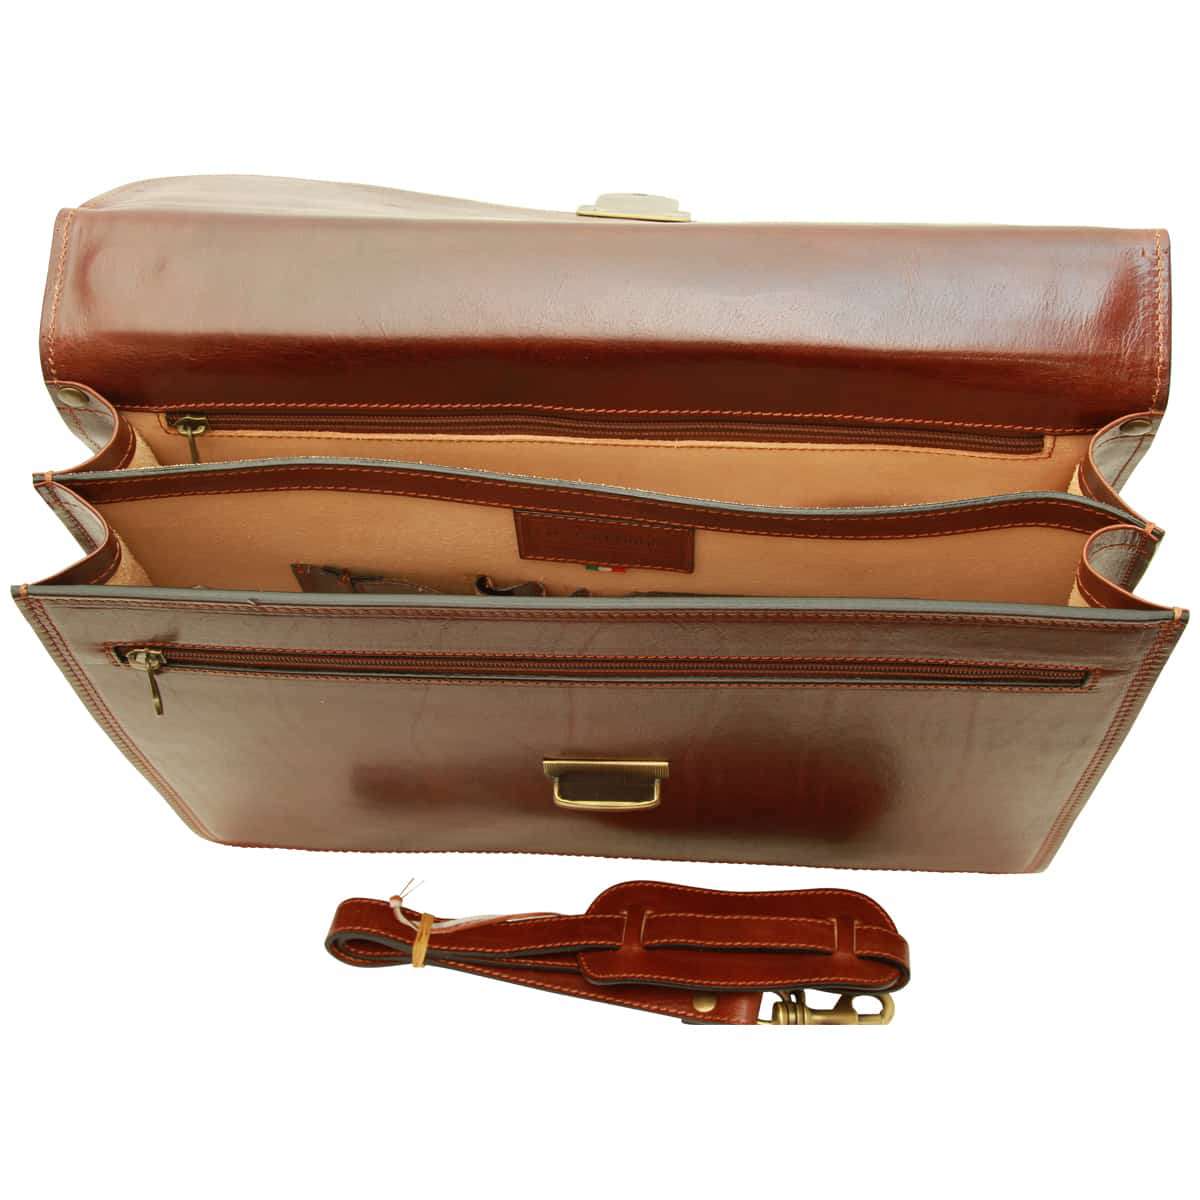 Vachetta Leather Briefcase - Brown | 200105MA | EURO | Old Angler Firenze